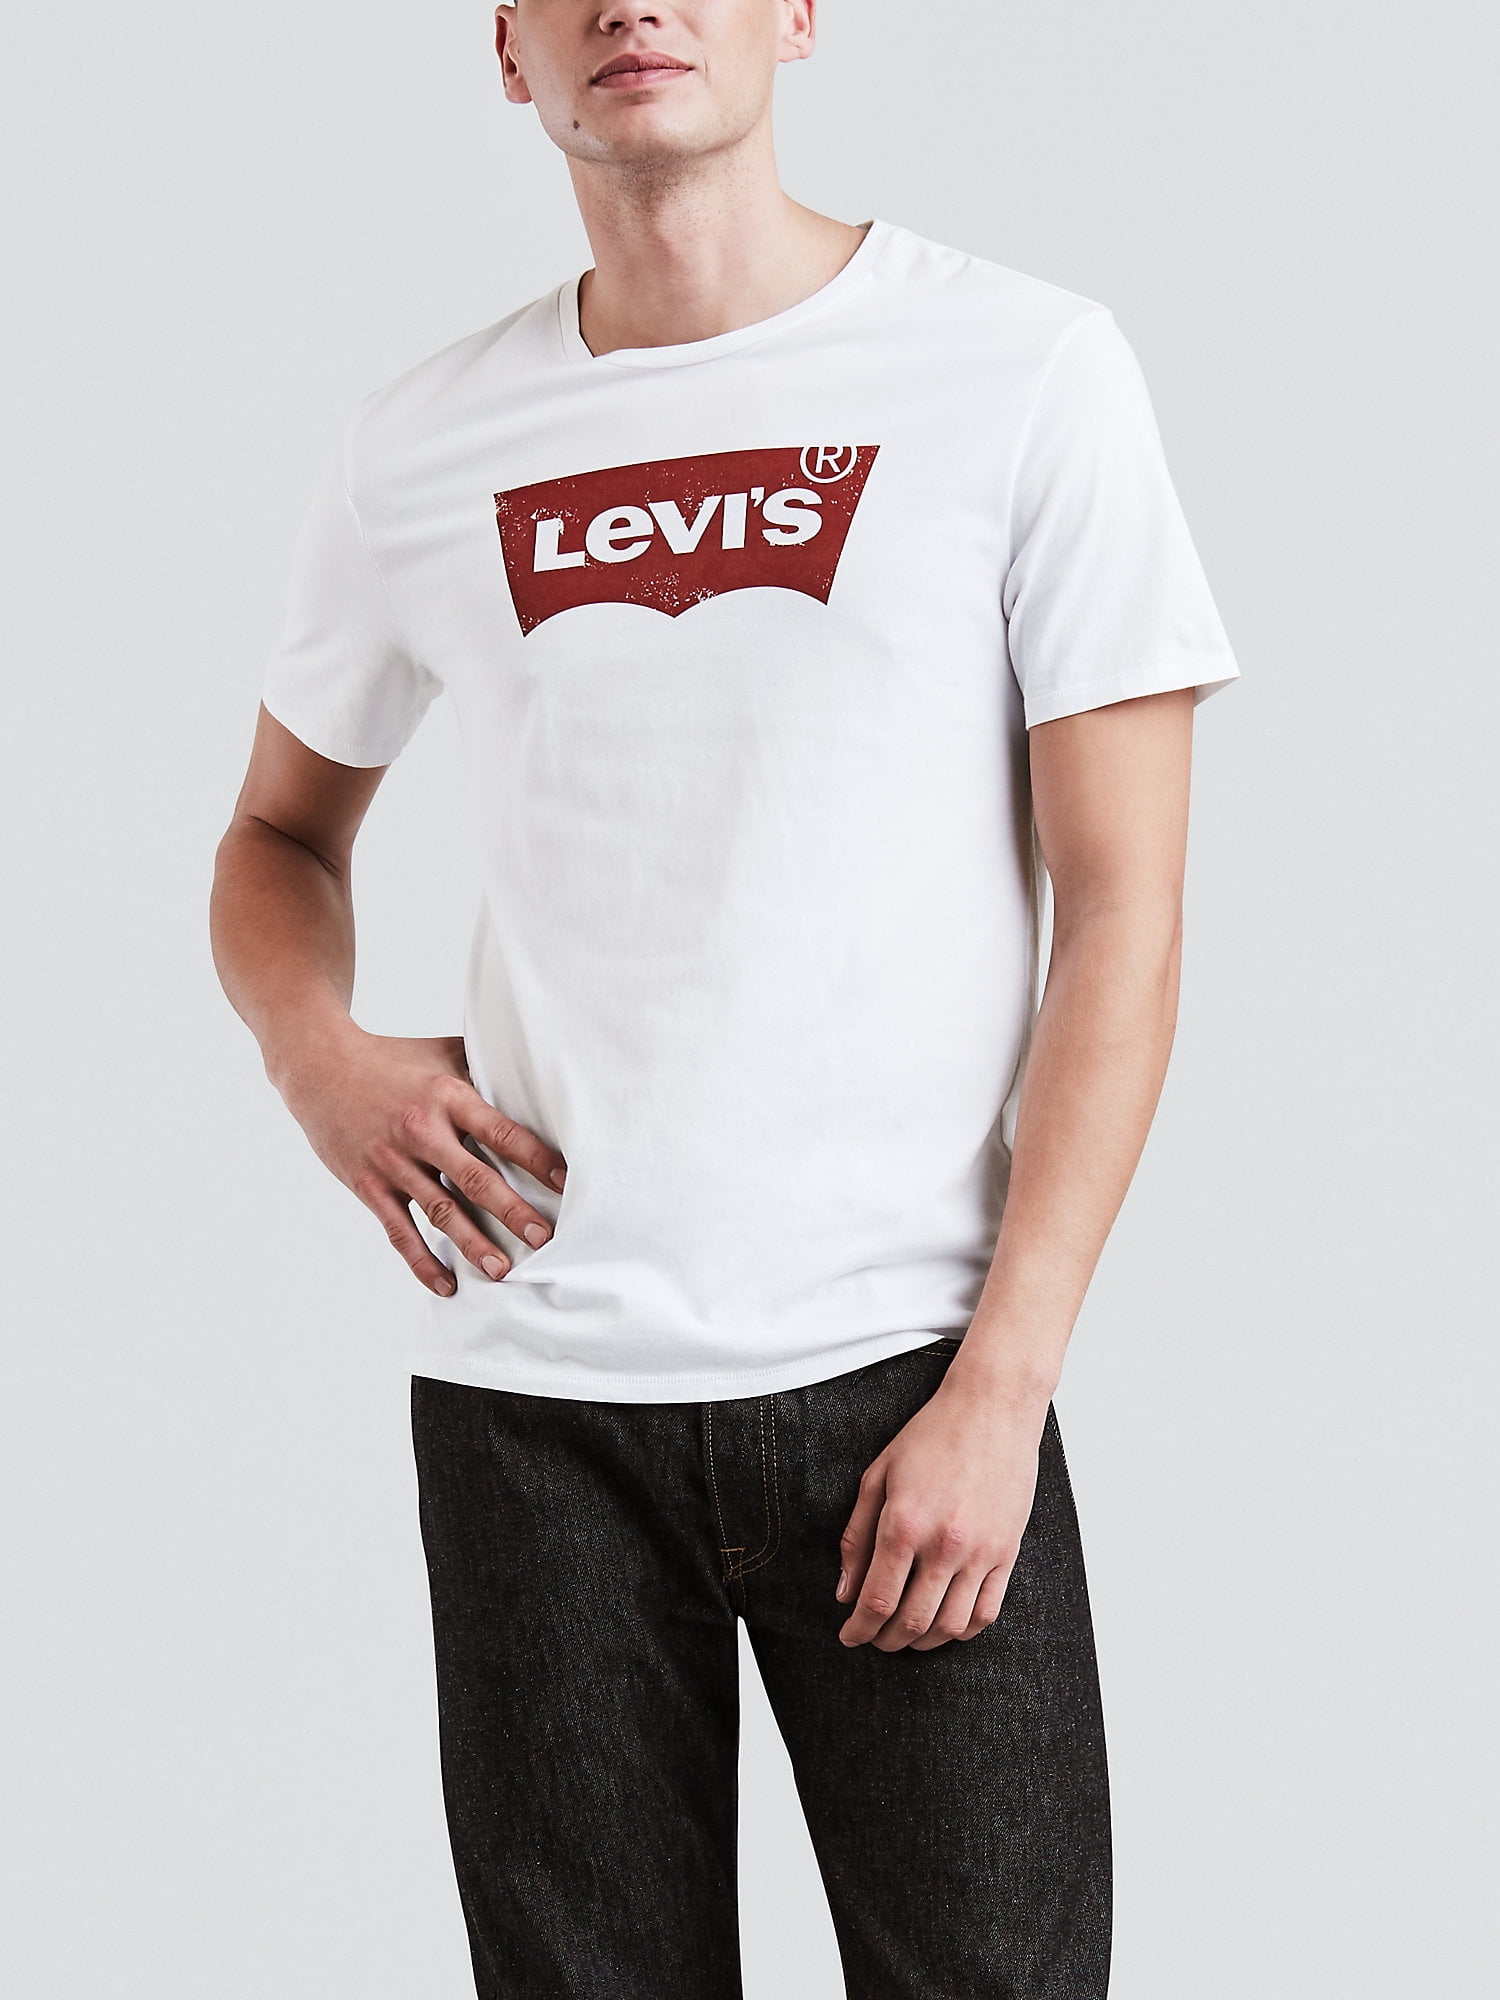 batwing logo levis